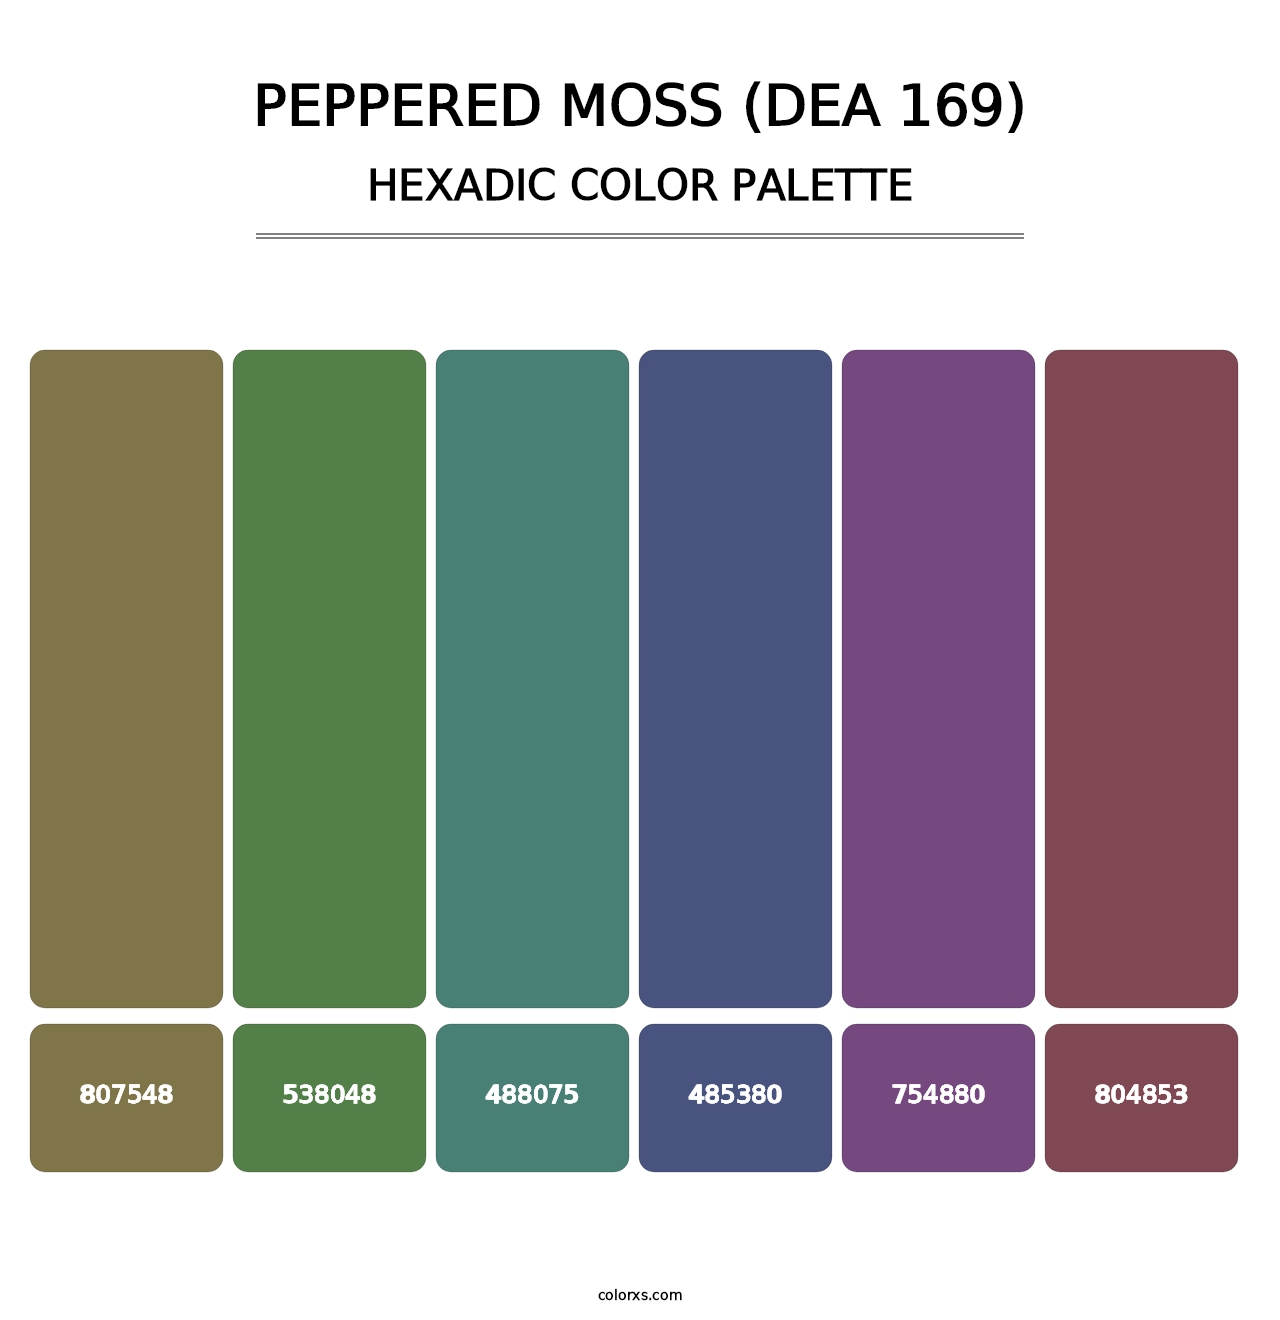 Peppered Moss (DEA 169) - Hexadic Color Palette